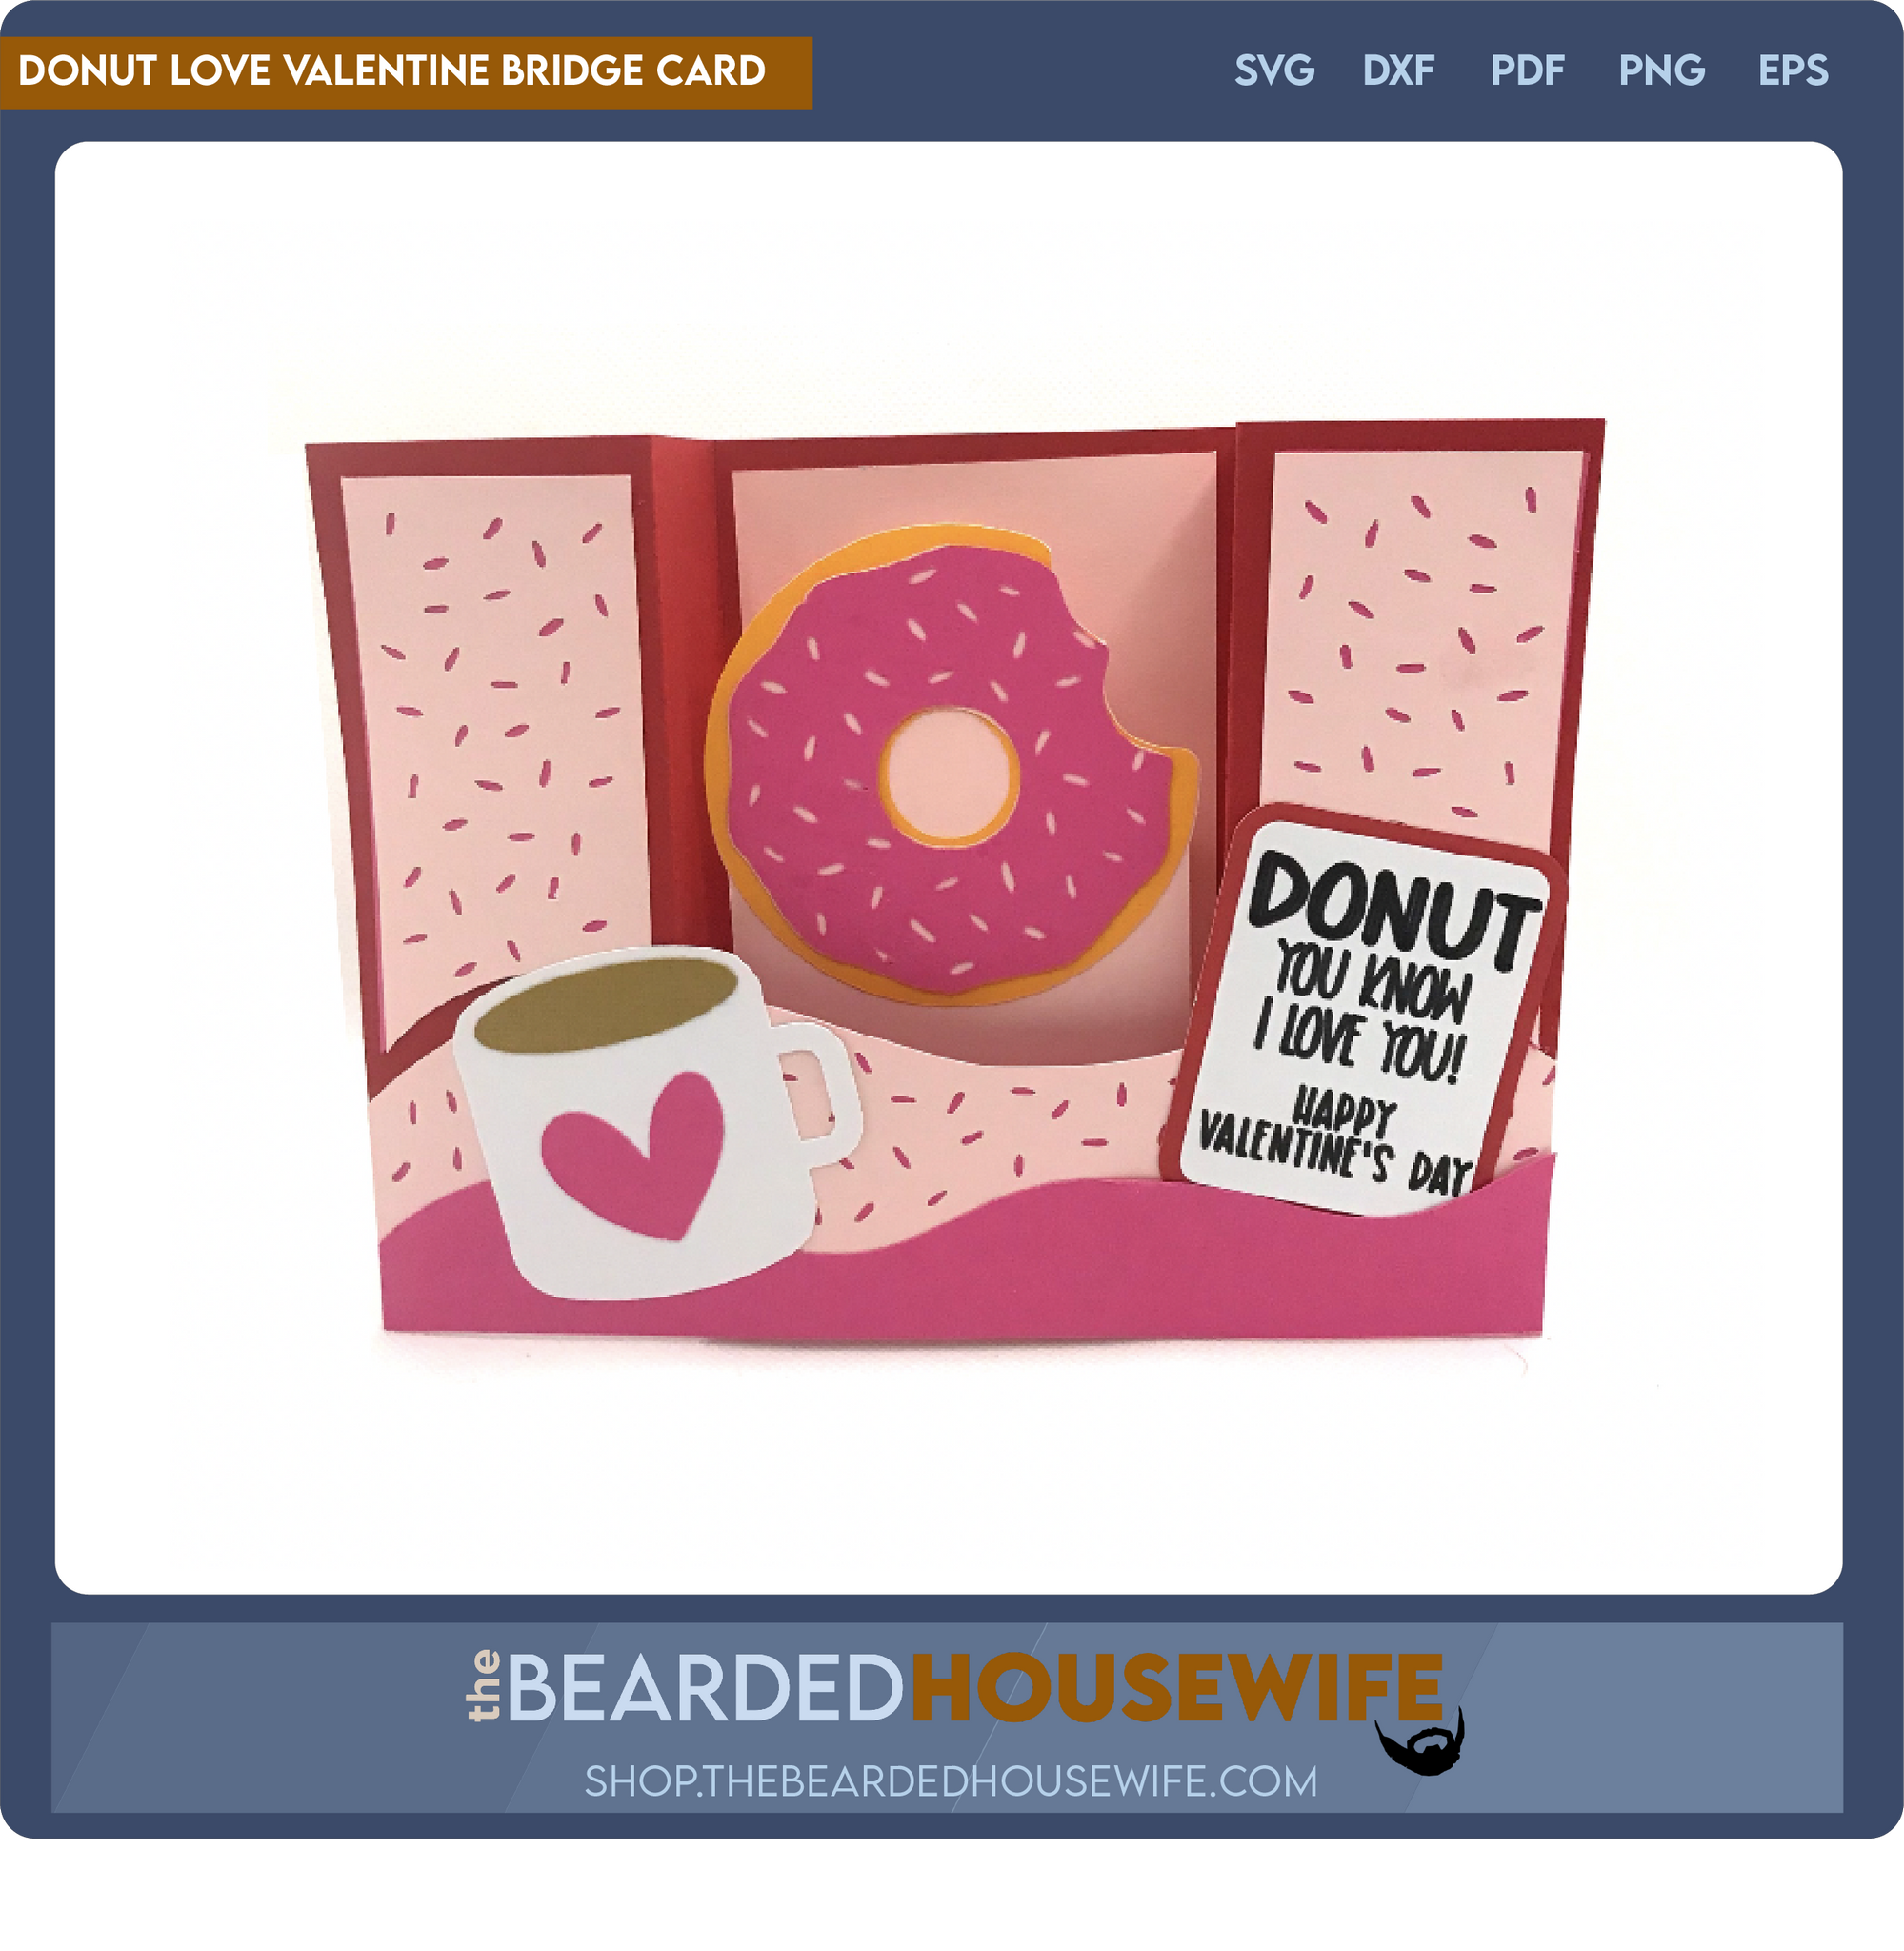 Donut Love Valentine Bridge Card